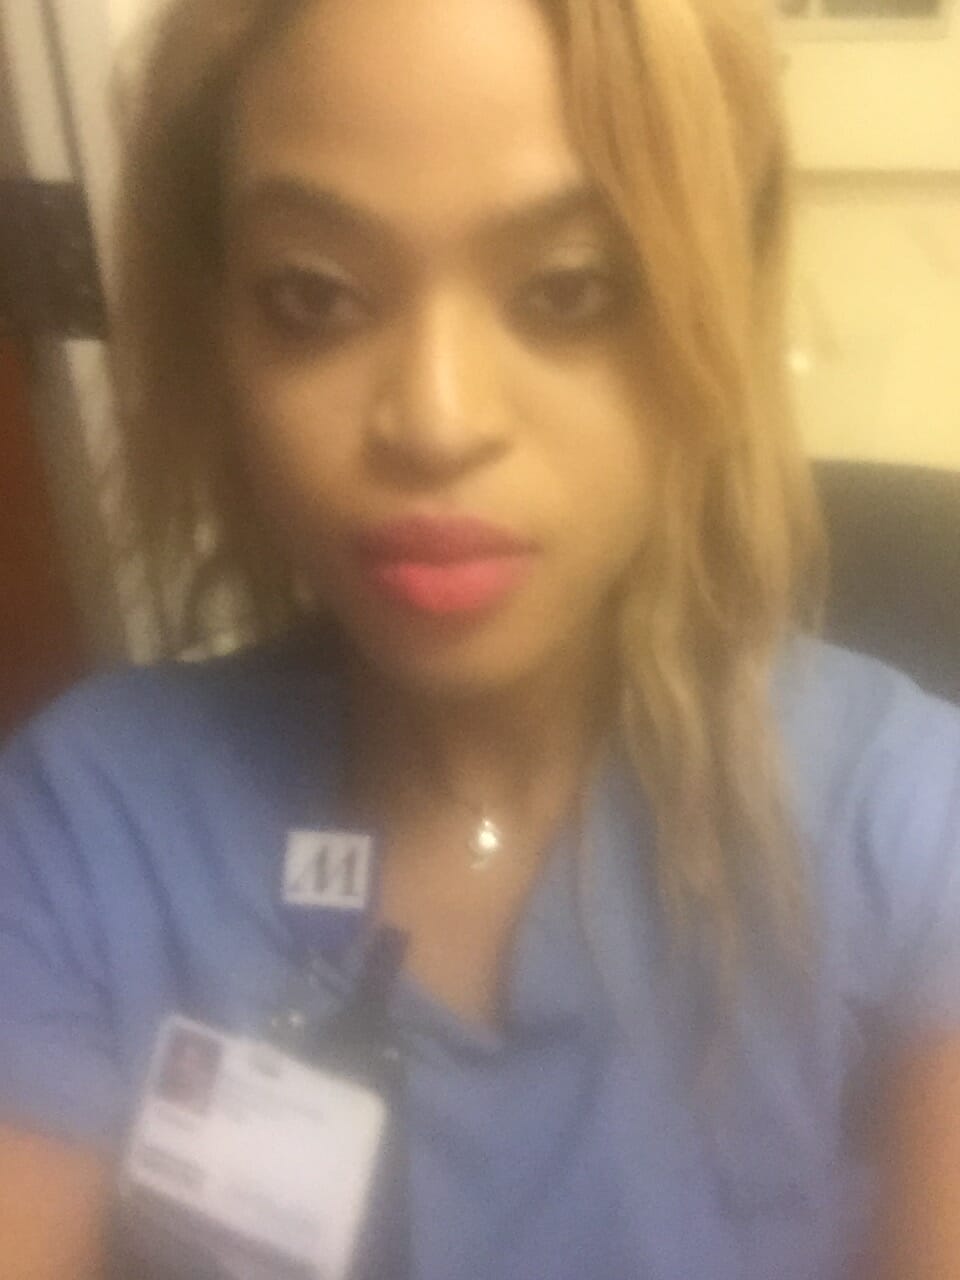 Nominated Nurse